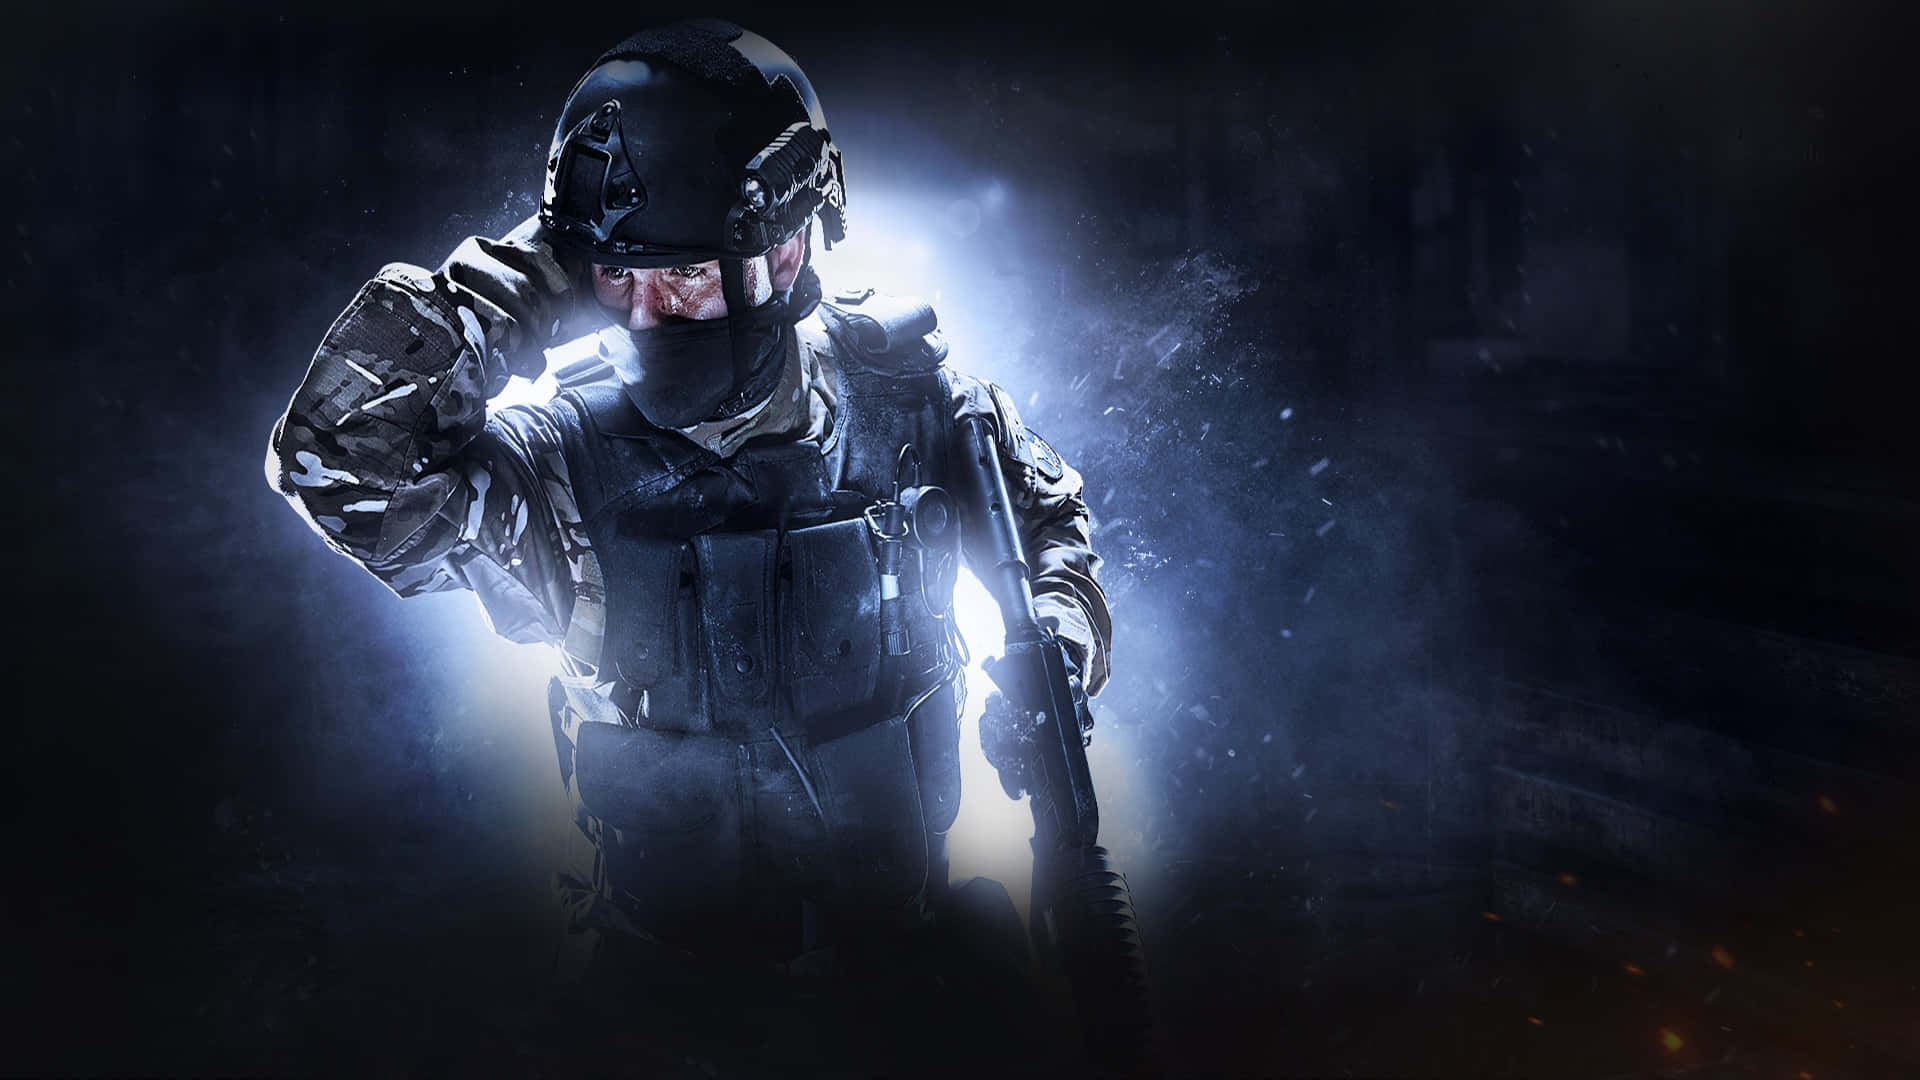 Soldadomilitar Brilhante 1080p Plano De Fundo Para Counter Strike Global Offensive.